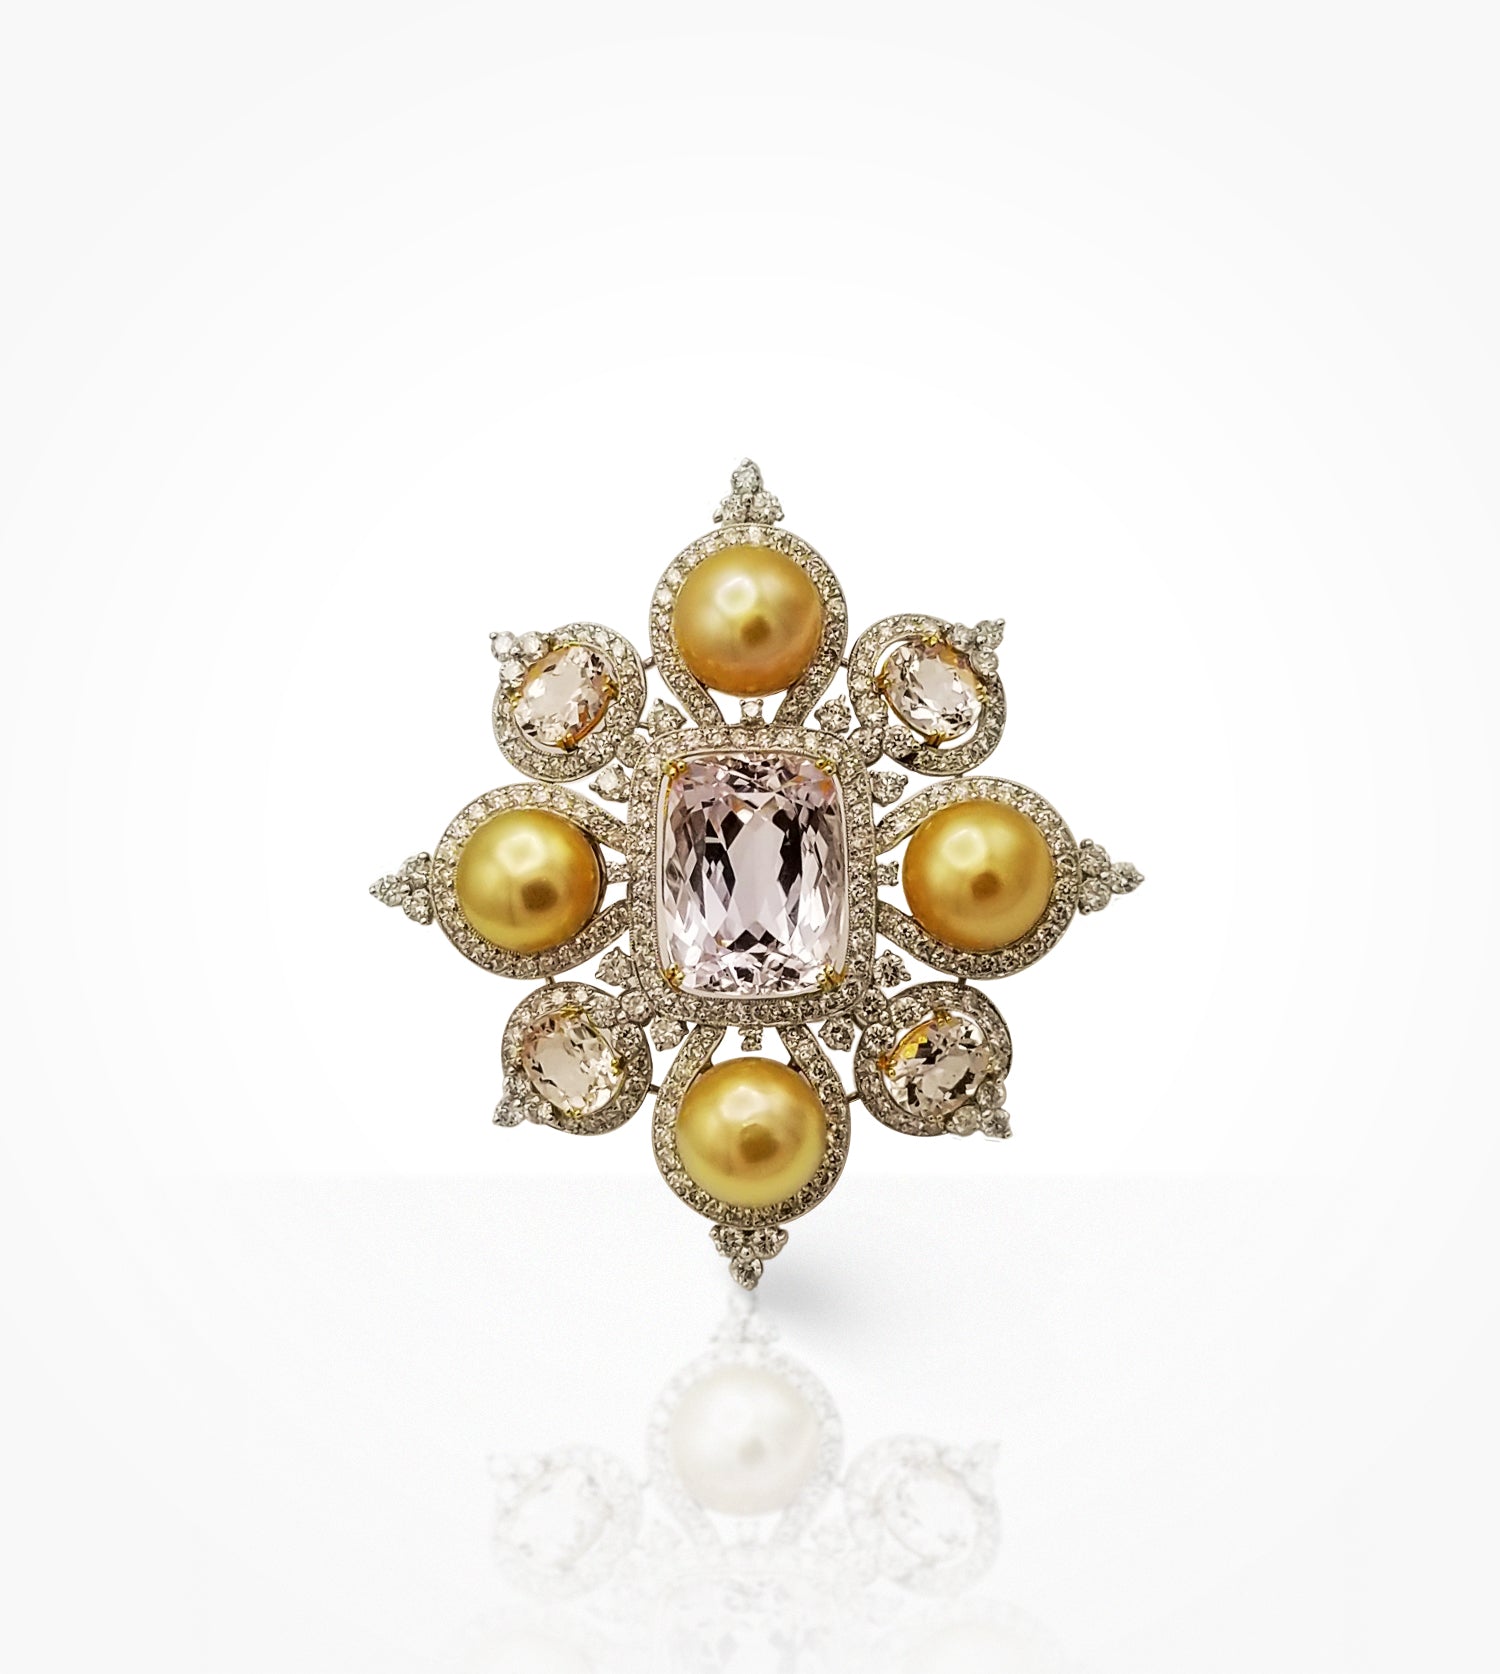 DD-006913 18KW Golden Pearls, Kunzite=26.9ct & diamond=7.3ct Brooch/Pendant. Price upon request